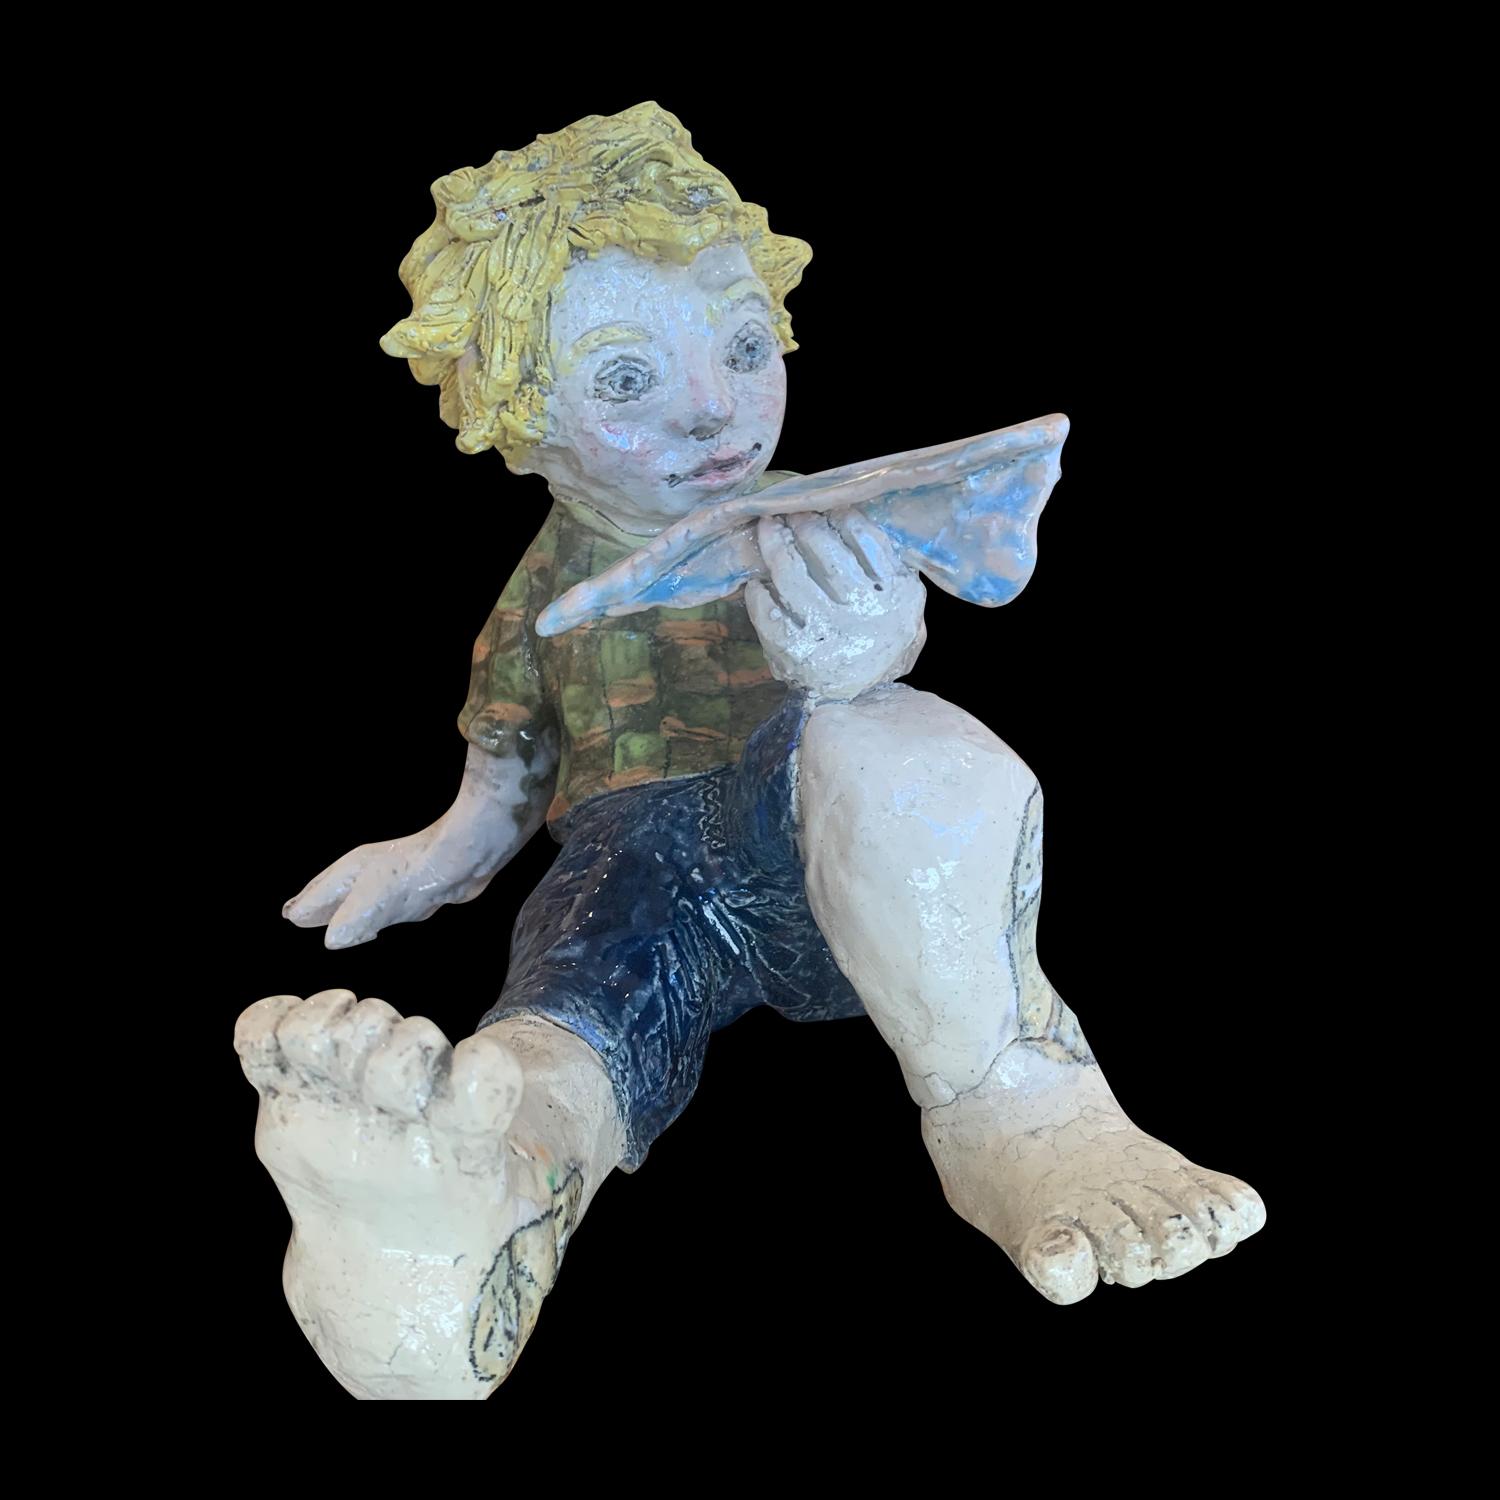 Adi Rom Figurative Sculpture - Young Boy and Paper Plain Figurative Naive Art Ceramic Sculpture 1 of 1 by Adi